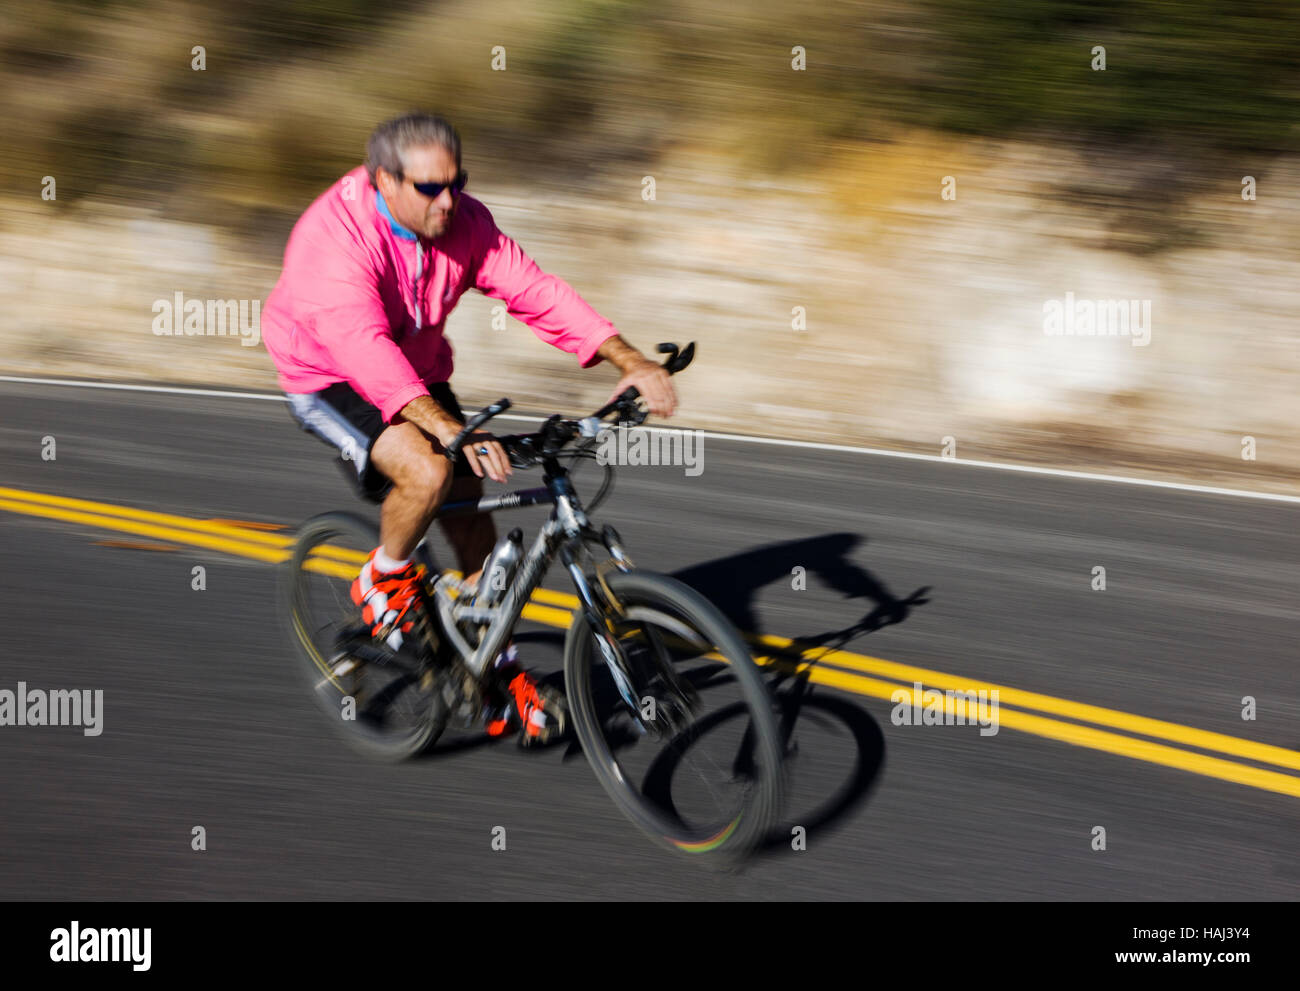 Man in a blur of motion riding a bike down a road near Rt. 1 and Malibu, California, USA Stock Photo